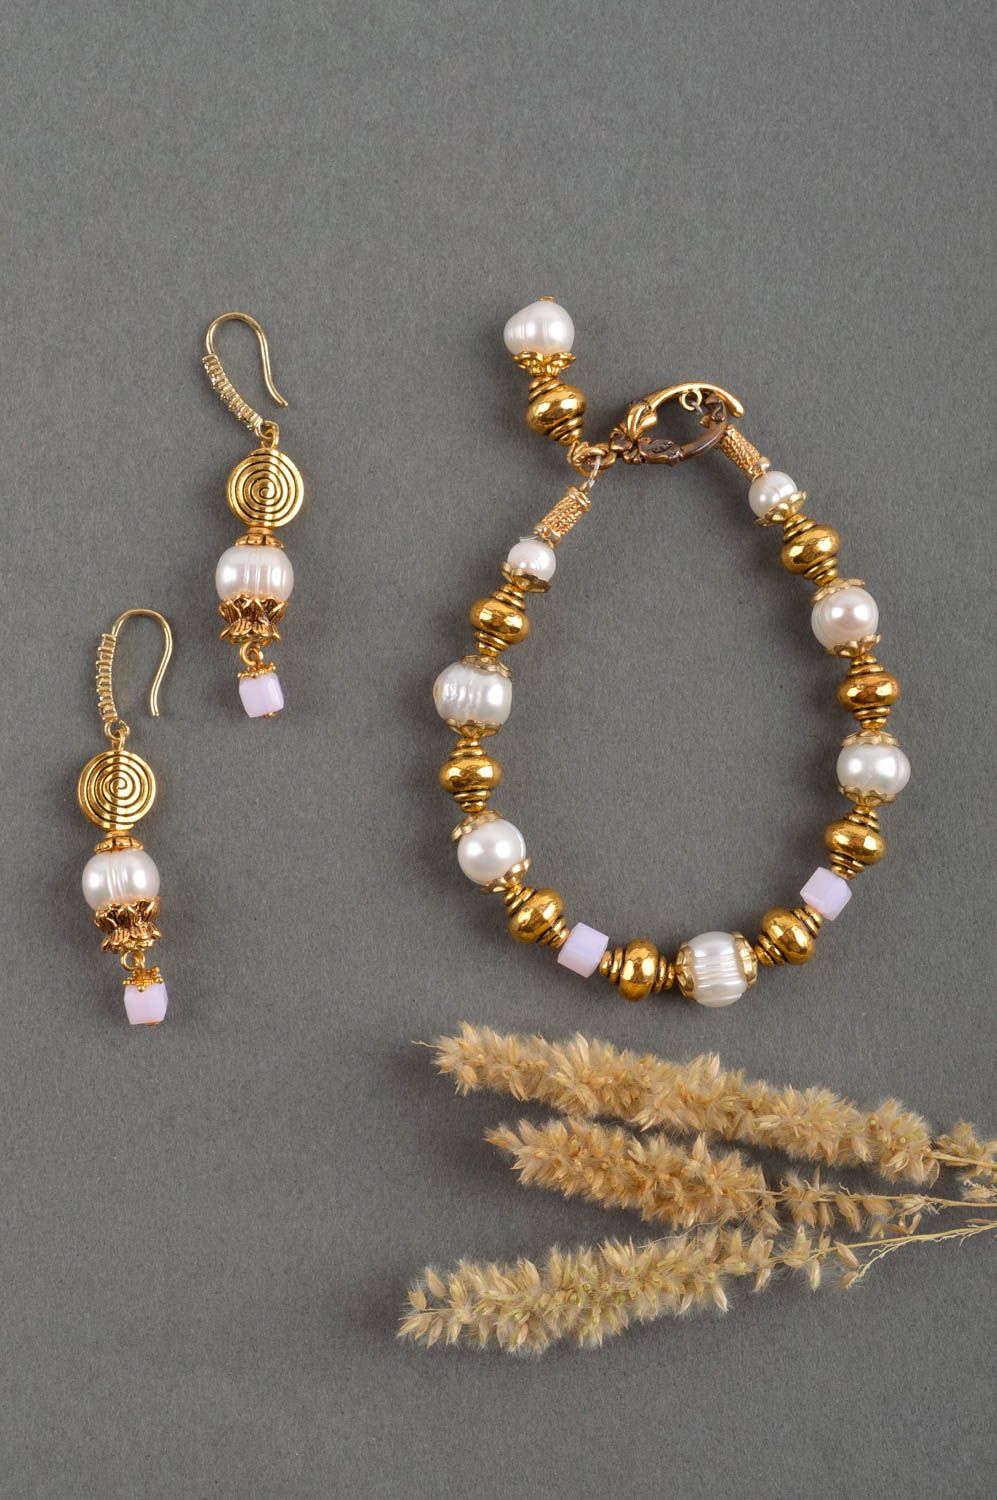 Homemade jewelry designer earrings wrist bracelet gemstone jewelry set photo 1